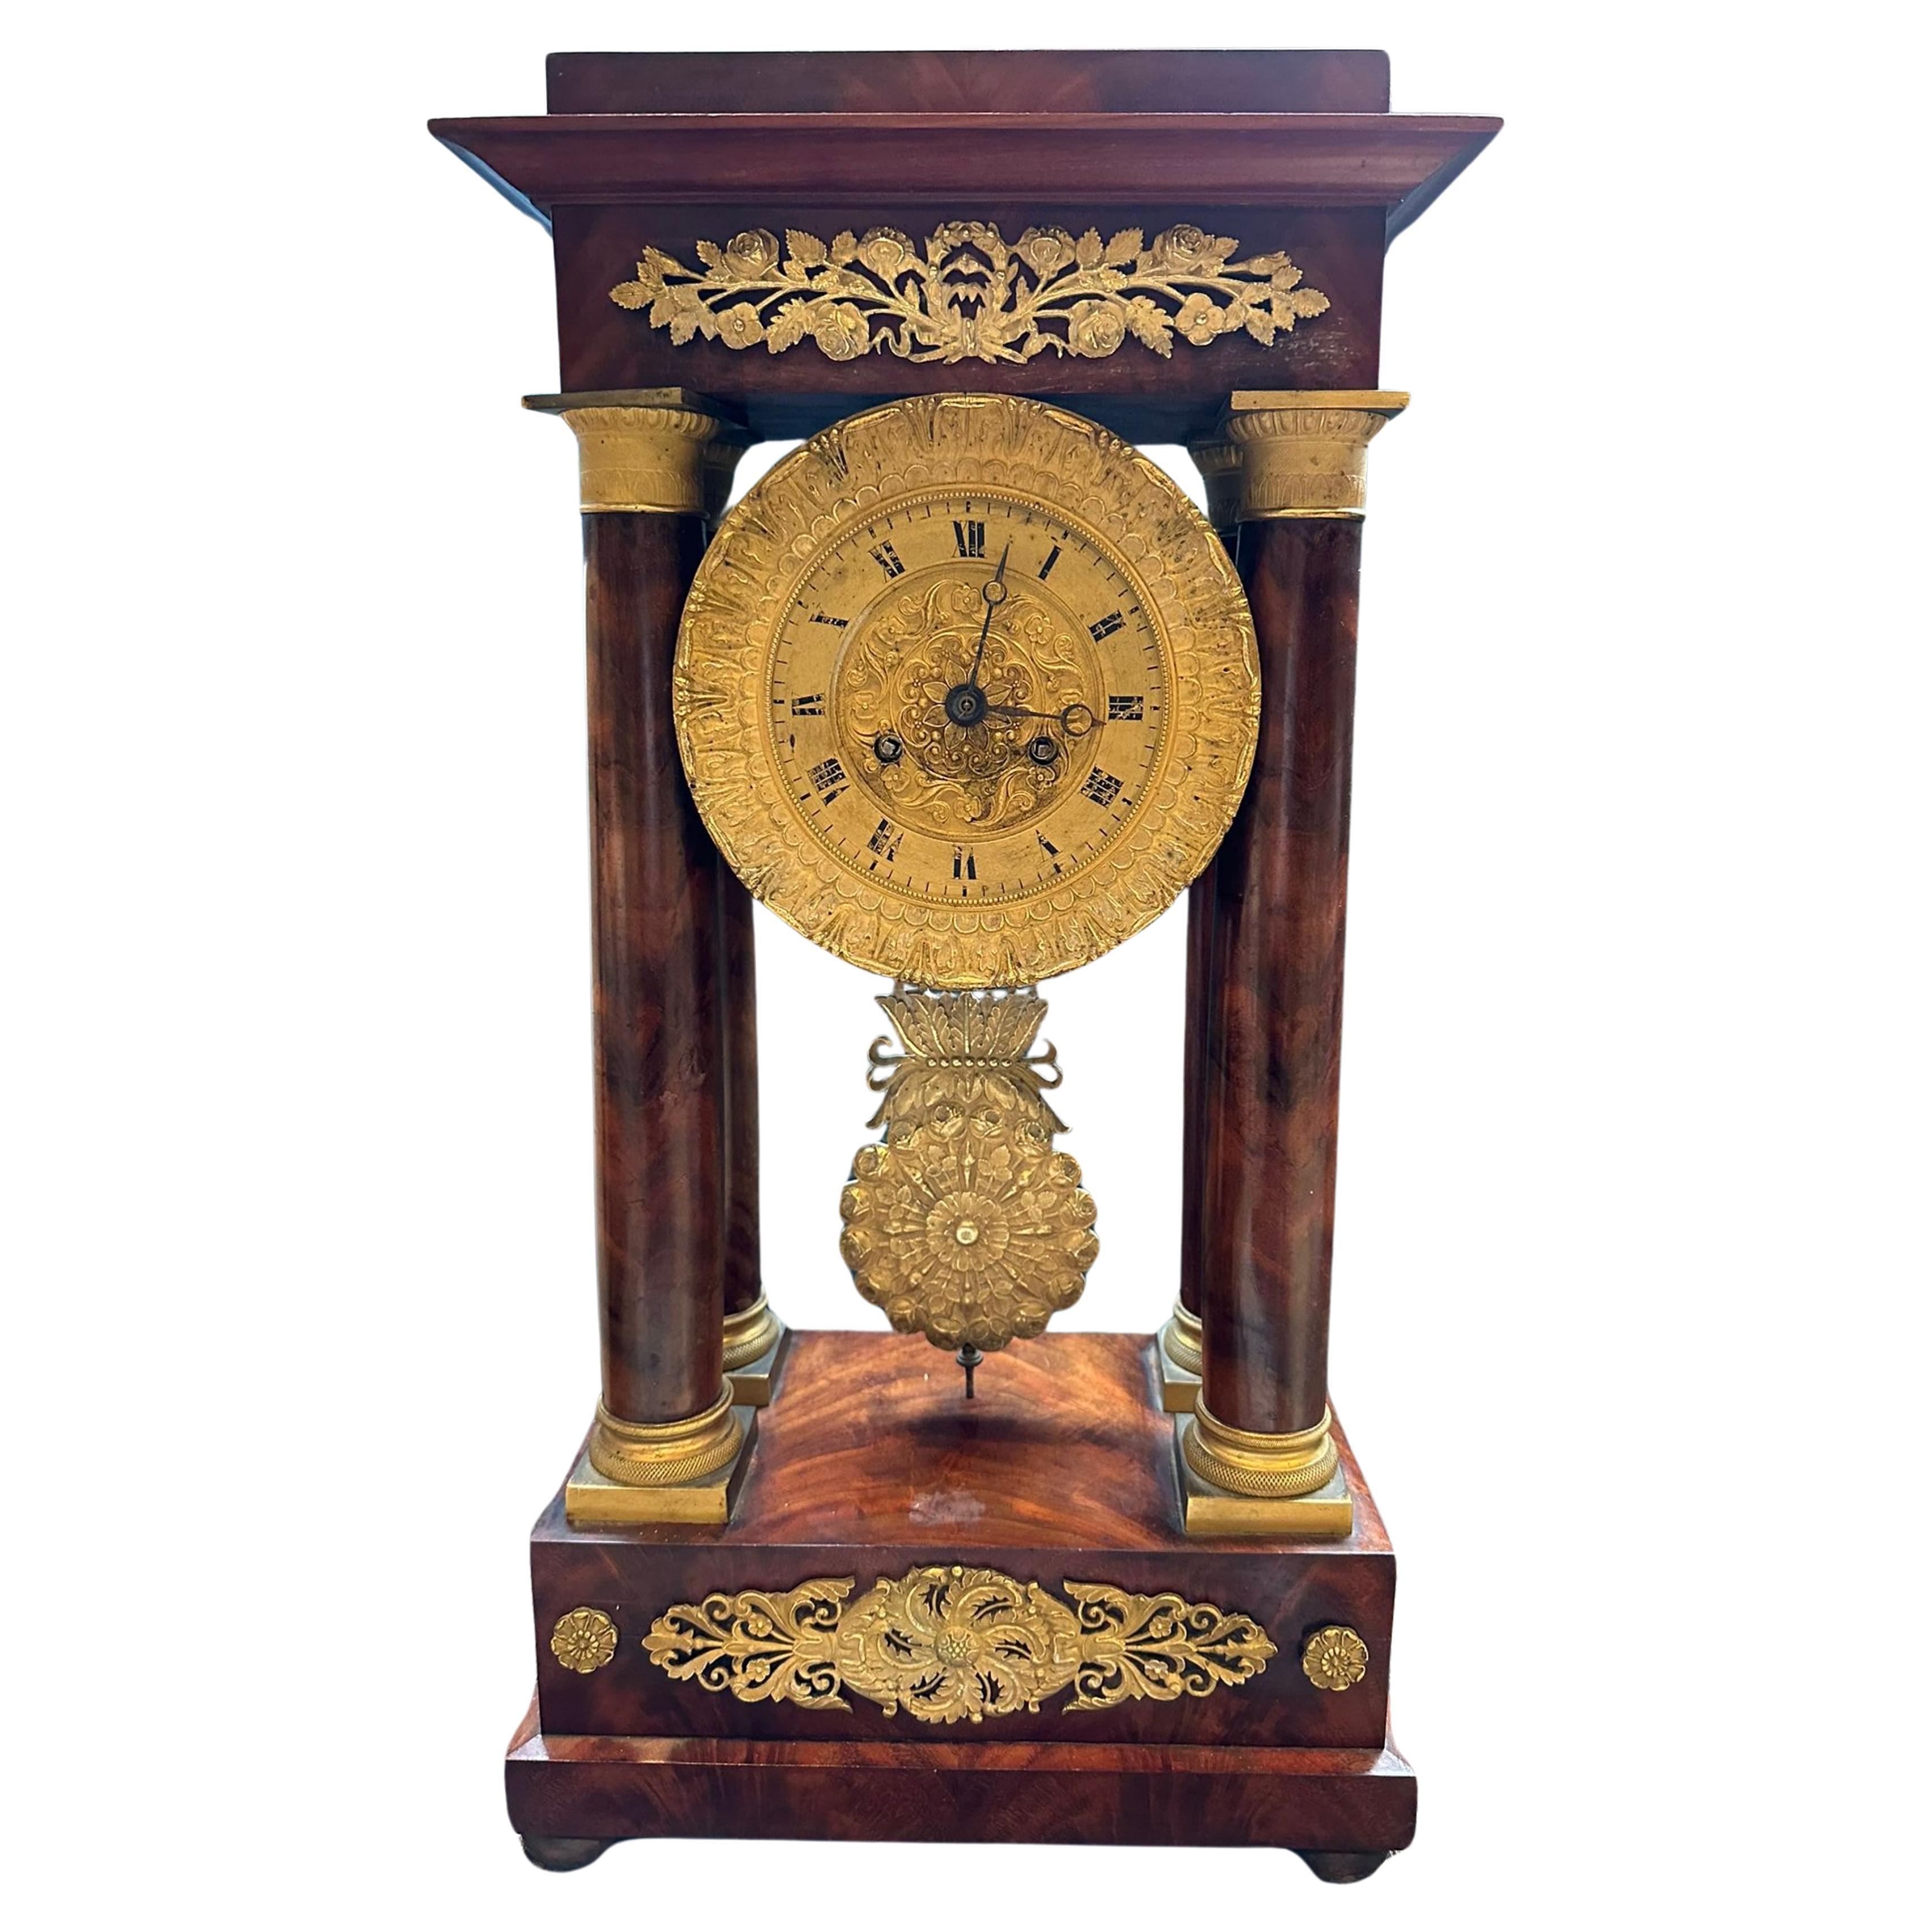 Etonnante horloge Napoléon III Empire Français 19ème siècle